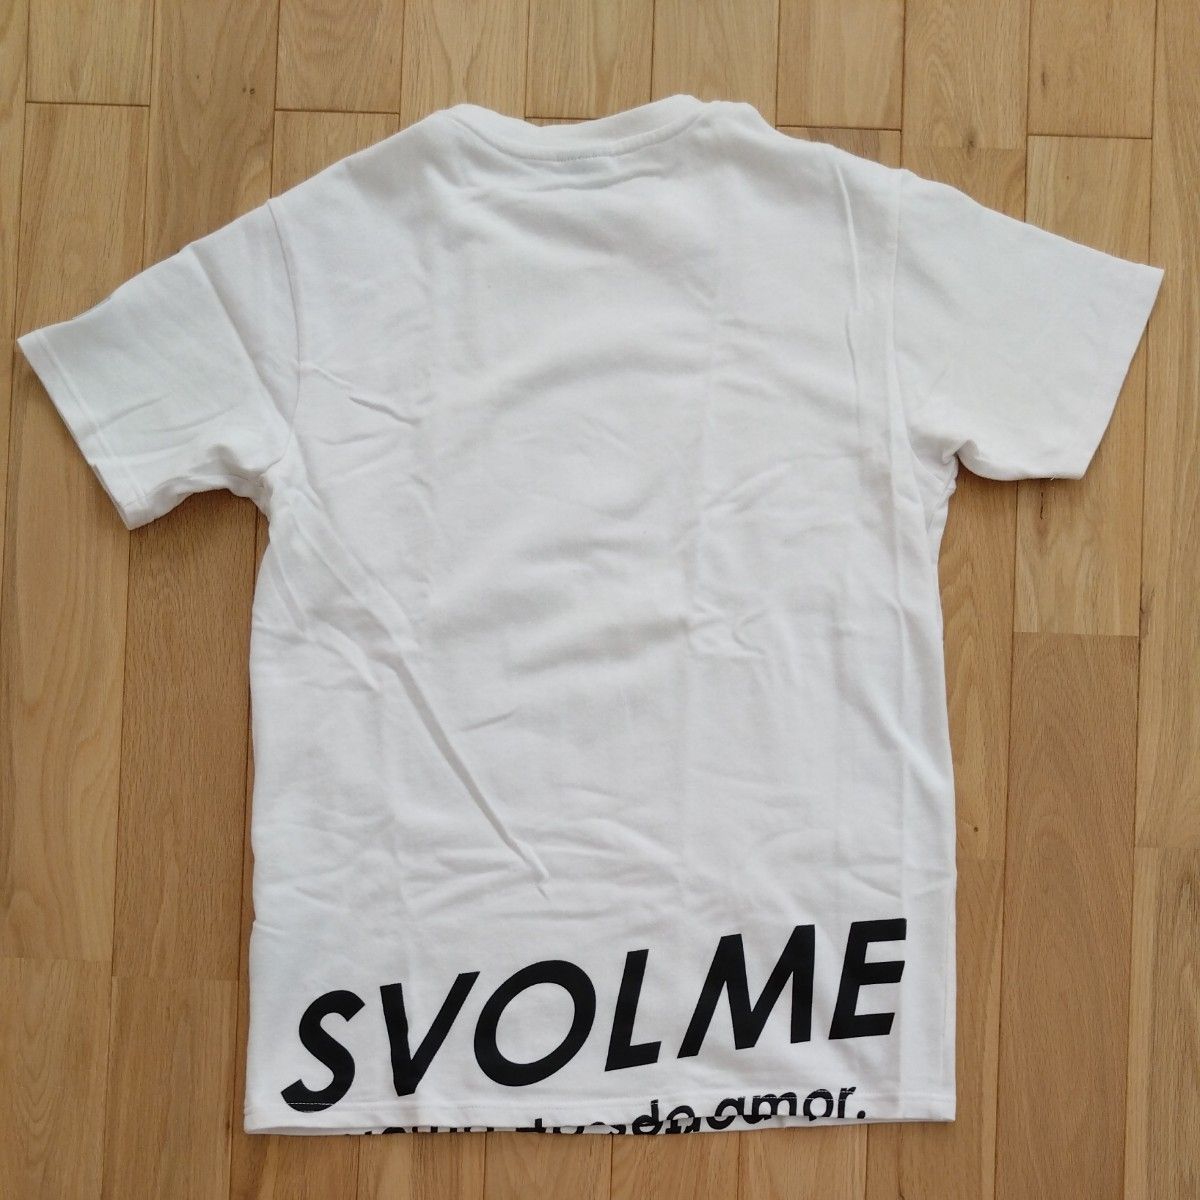 【SVOLME】 スボルメ Tシャツ Mサイズ サッカー フットサル 半袖 ホワイト 白